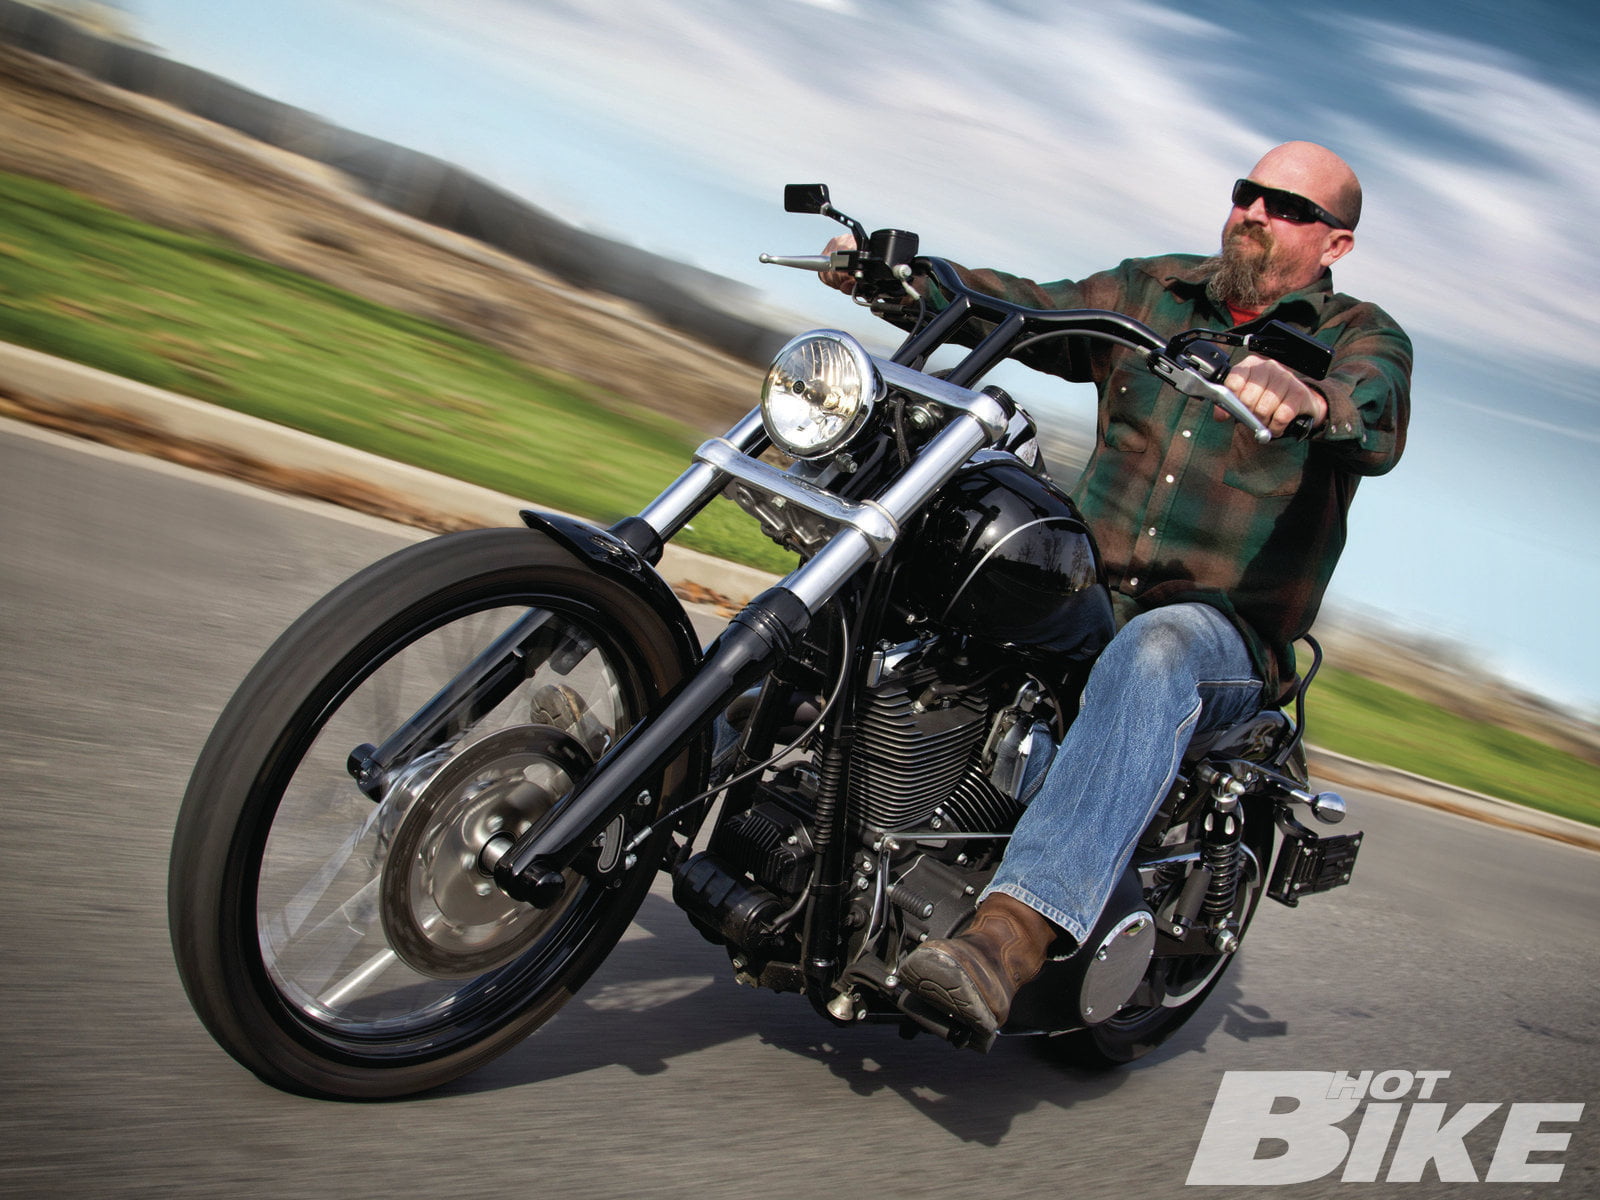 Harley Davidson, West Coast T Bars, and Avon - Dyna In | Hot Bike Magazine